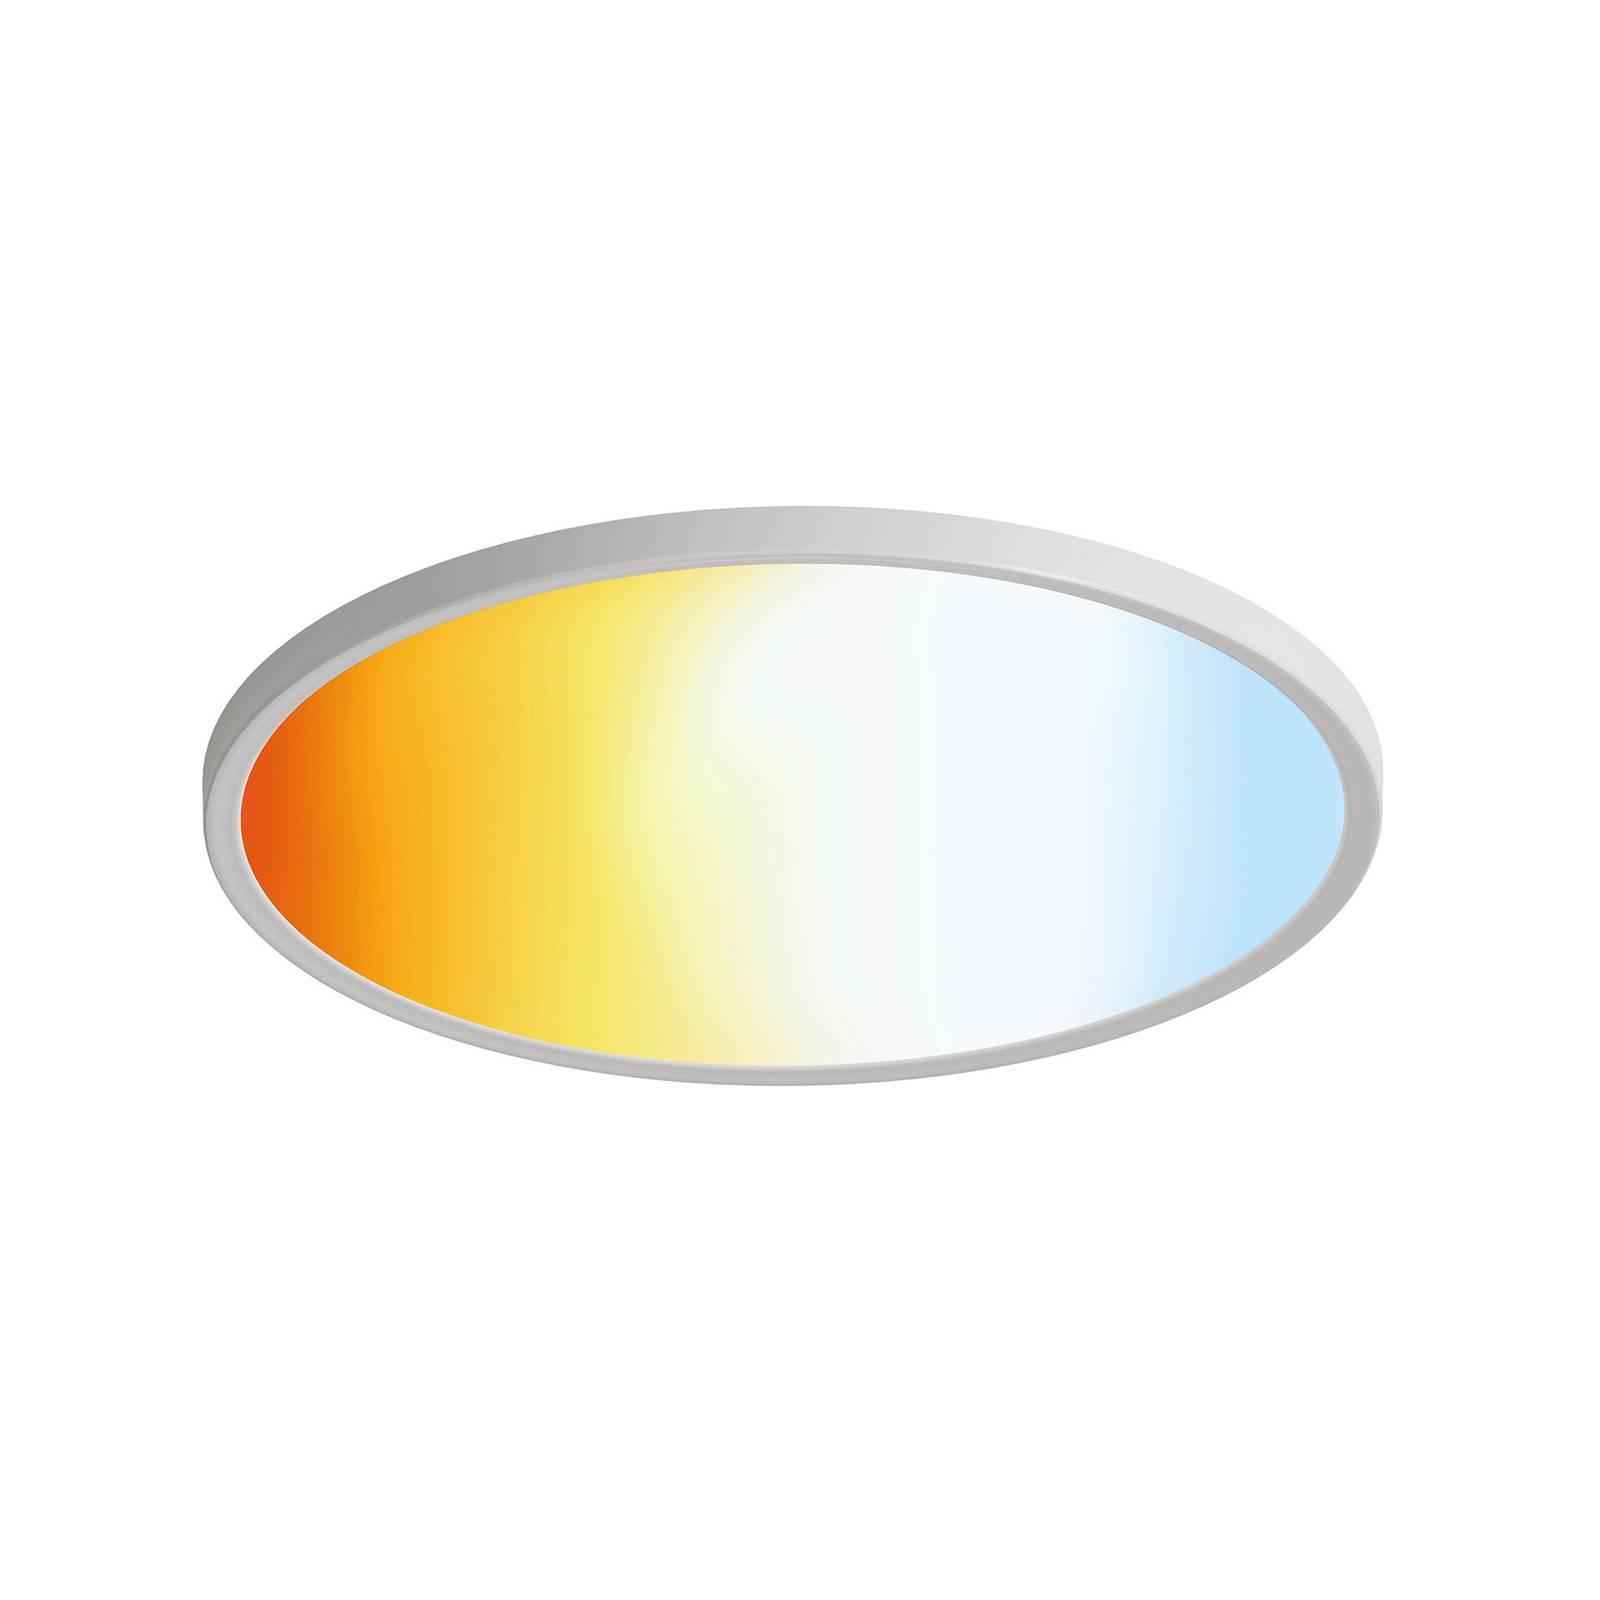 Müller Licht tint Smart LED-Deckenleuchte Amela, Ø 50 cm